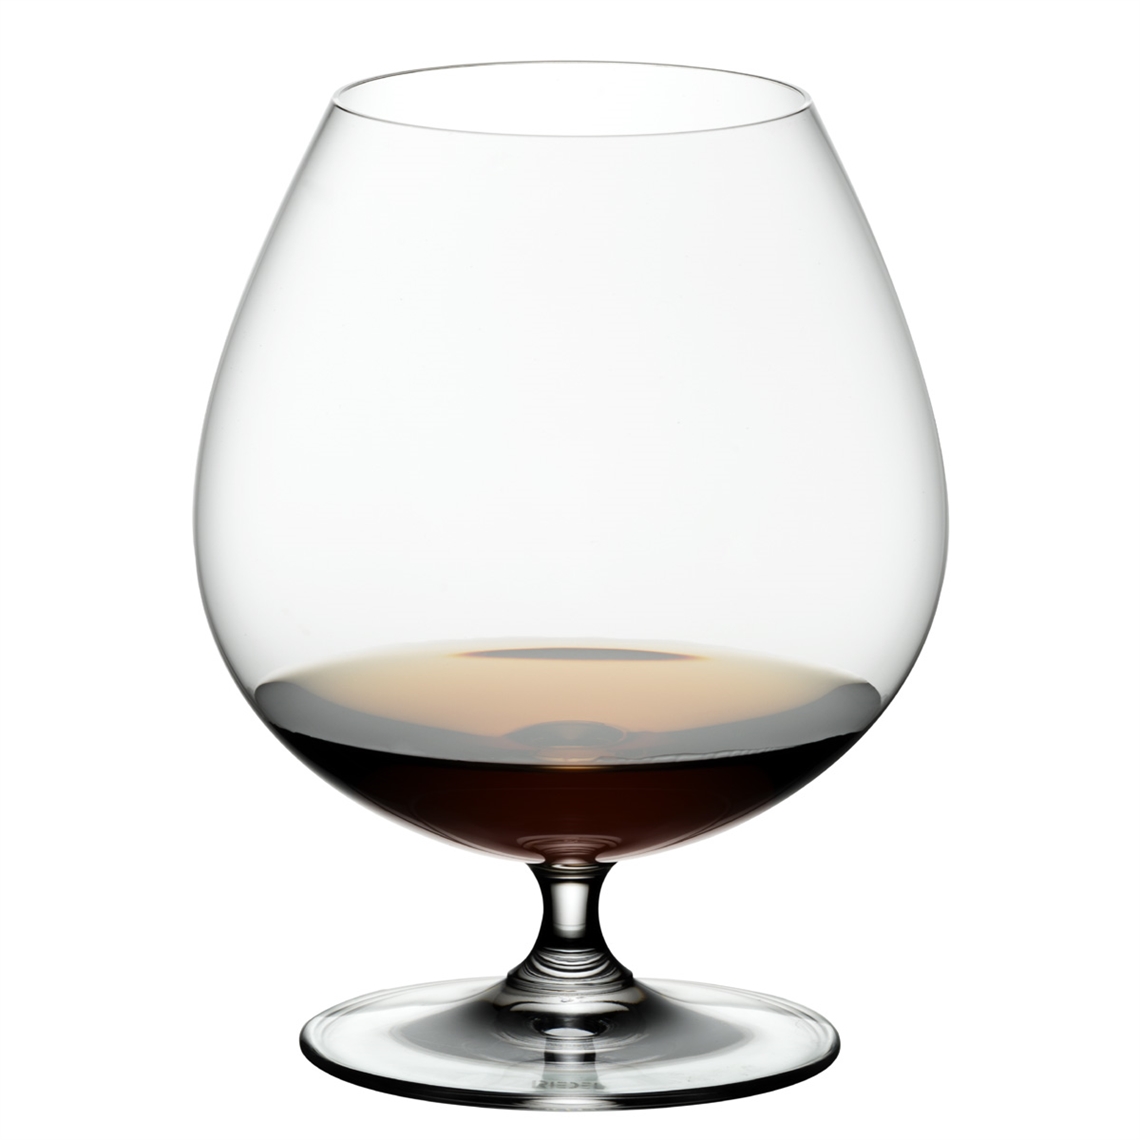 View more burgundy wine glasses from our Spirit Glasses range